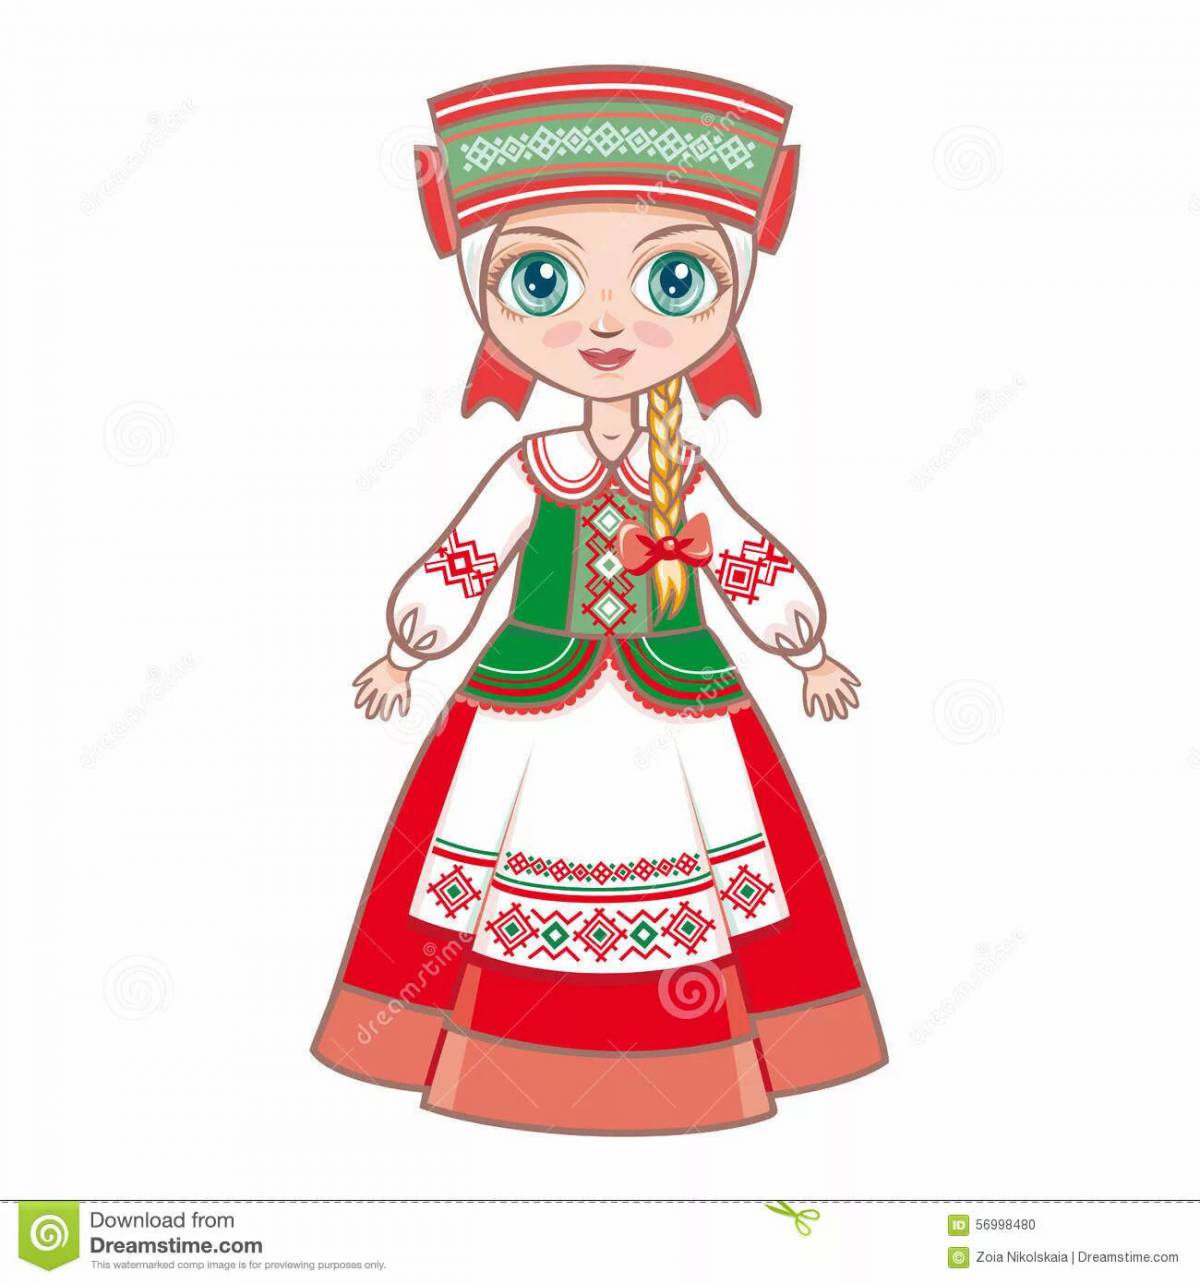 Humorous Belarusian national costume for children